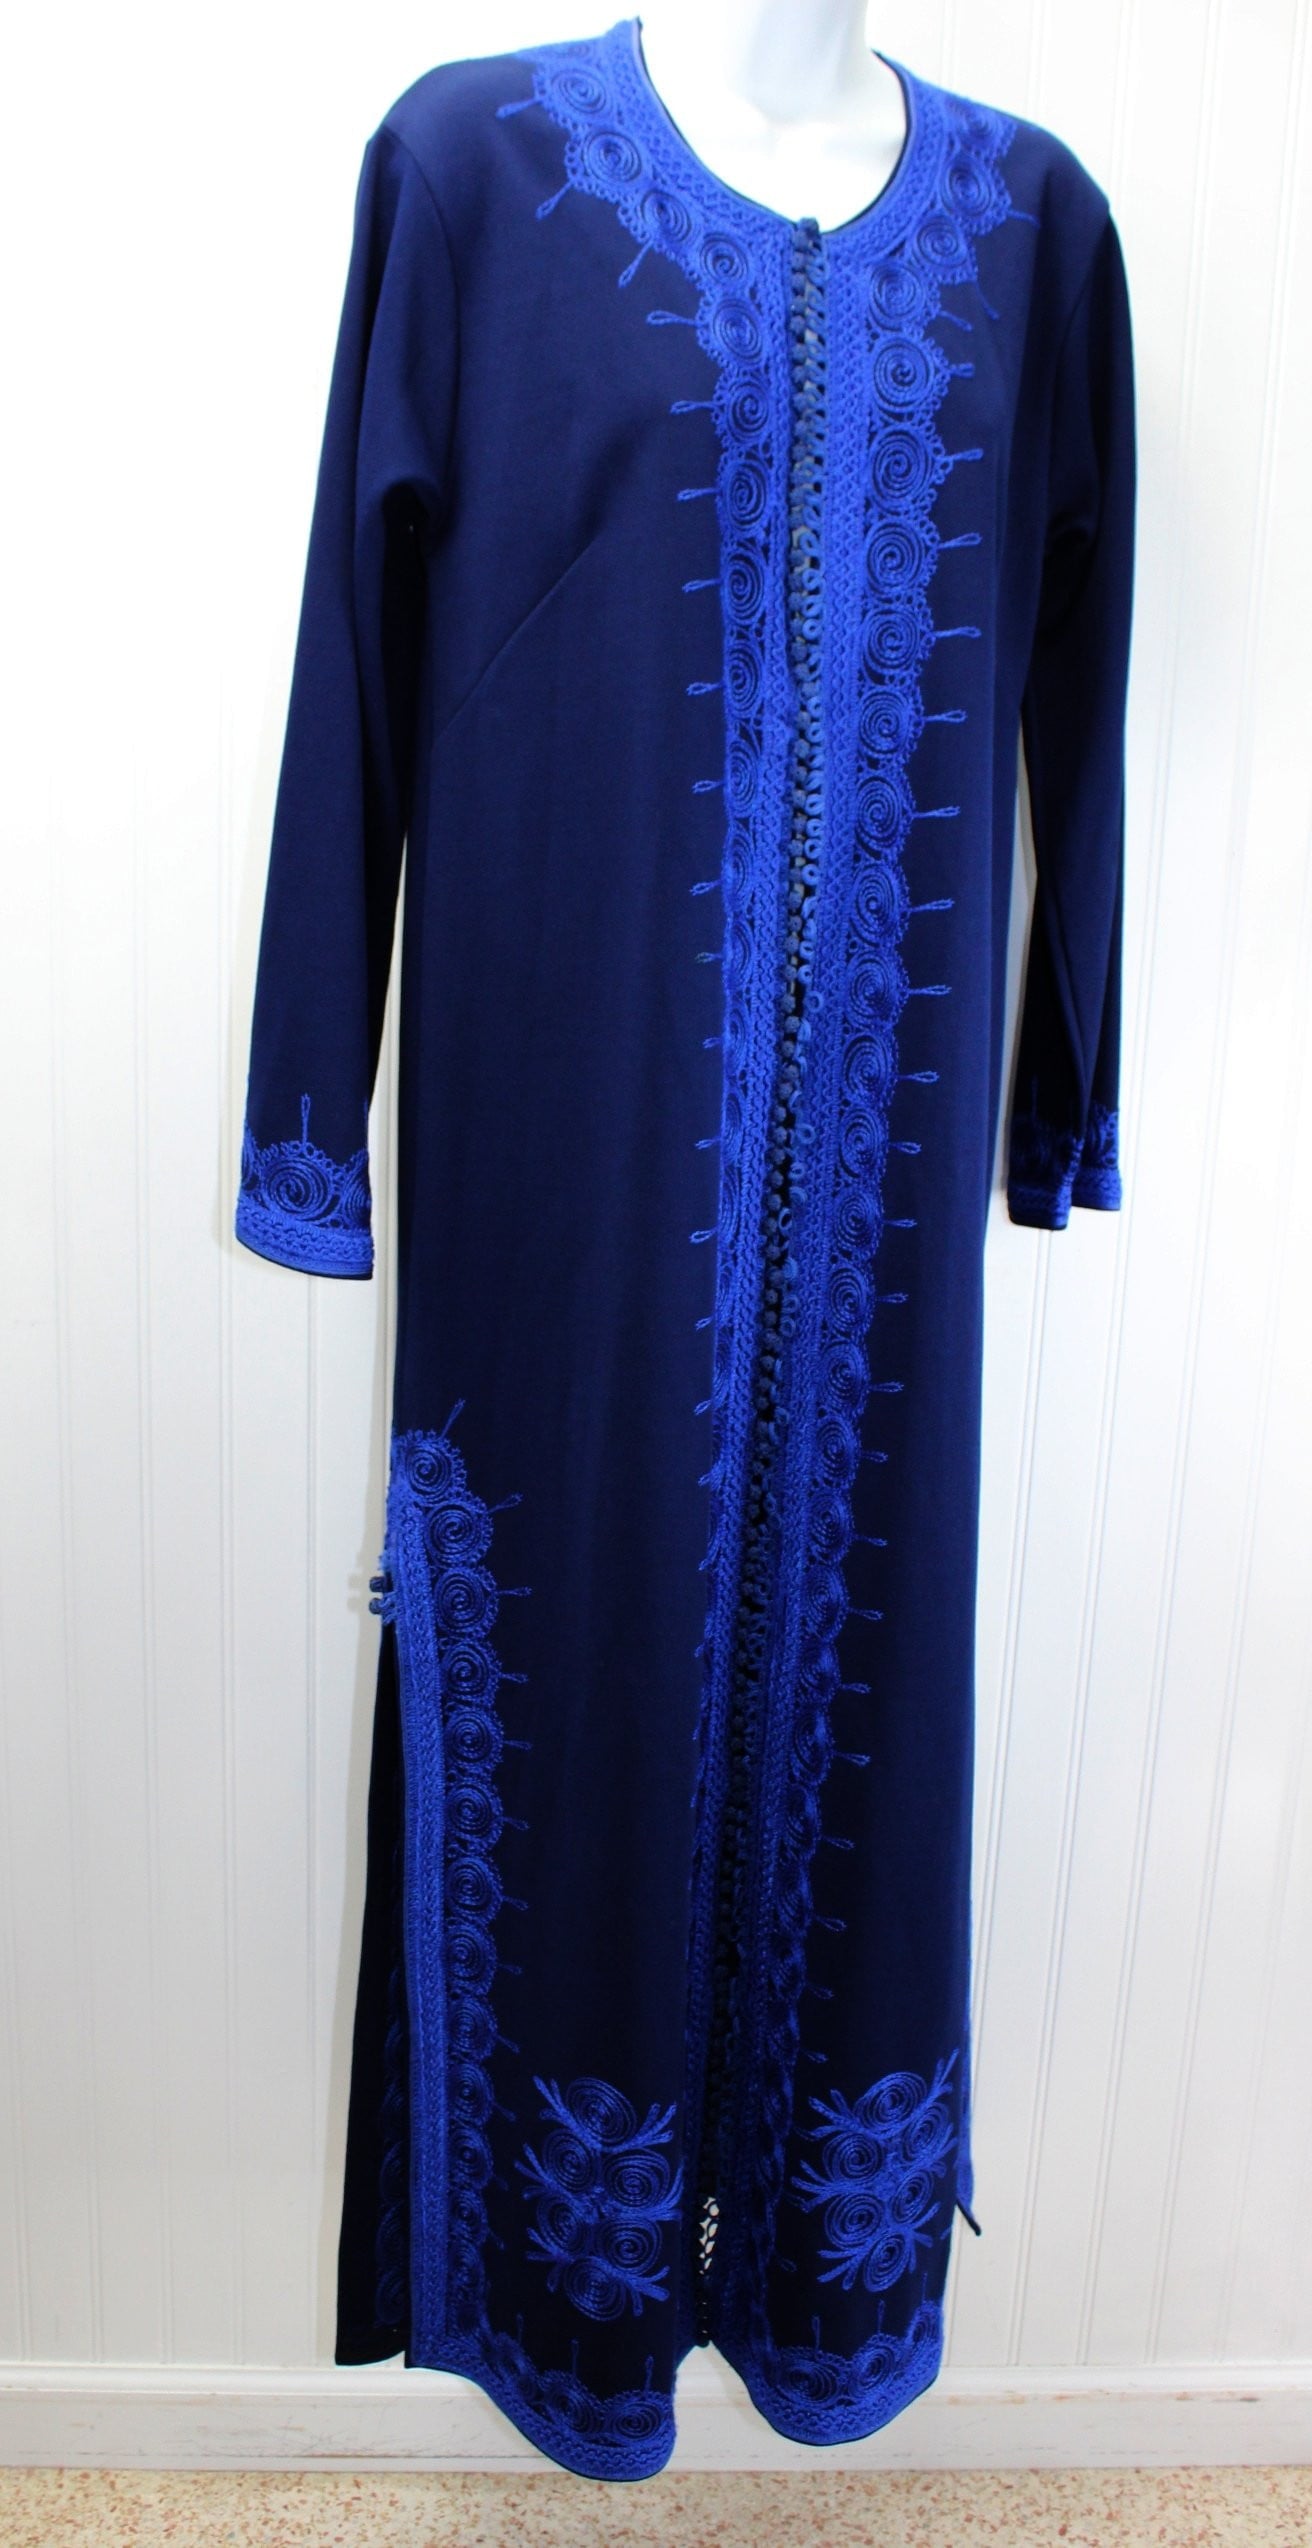 Islam Embroidered Dress Cloak - Turkey Morocco - Dark Blue - tassel Head Cover abaya